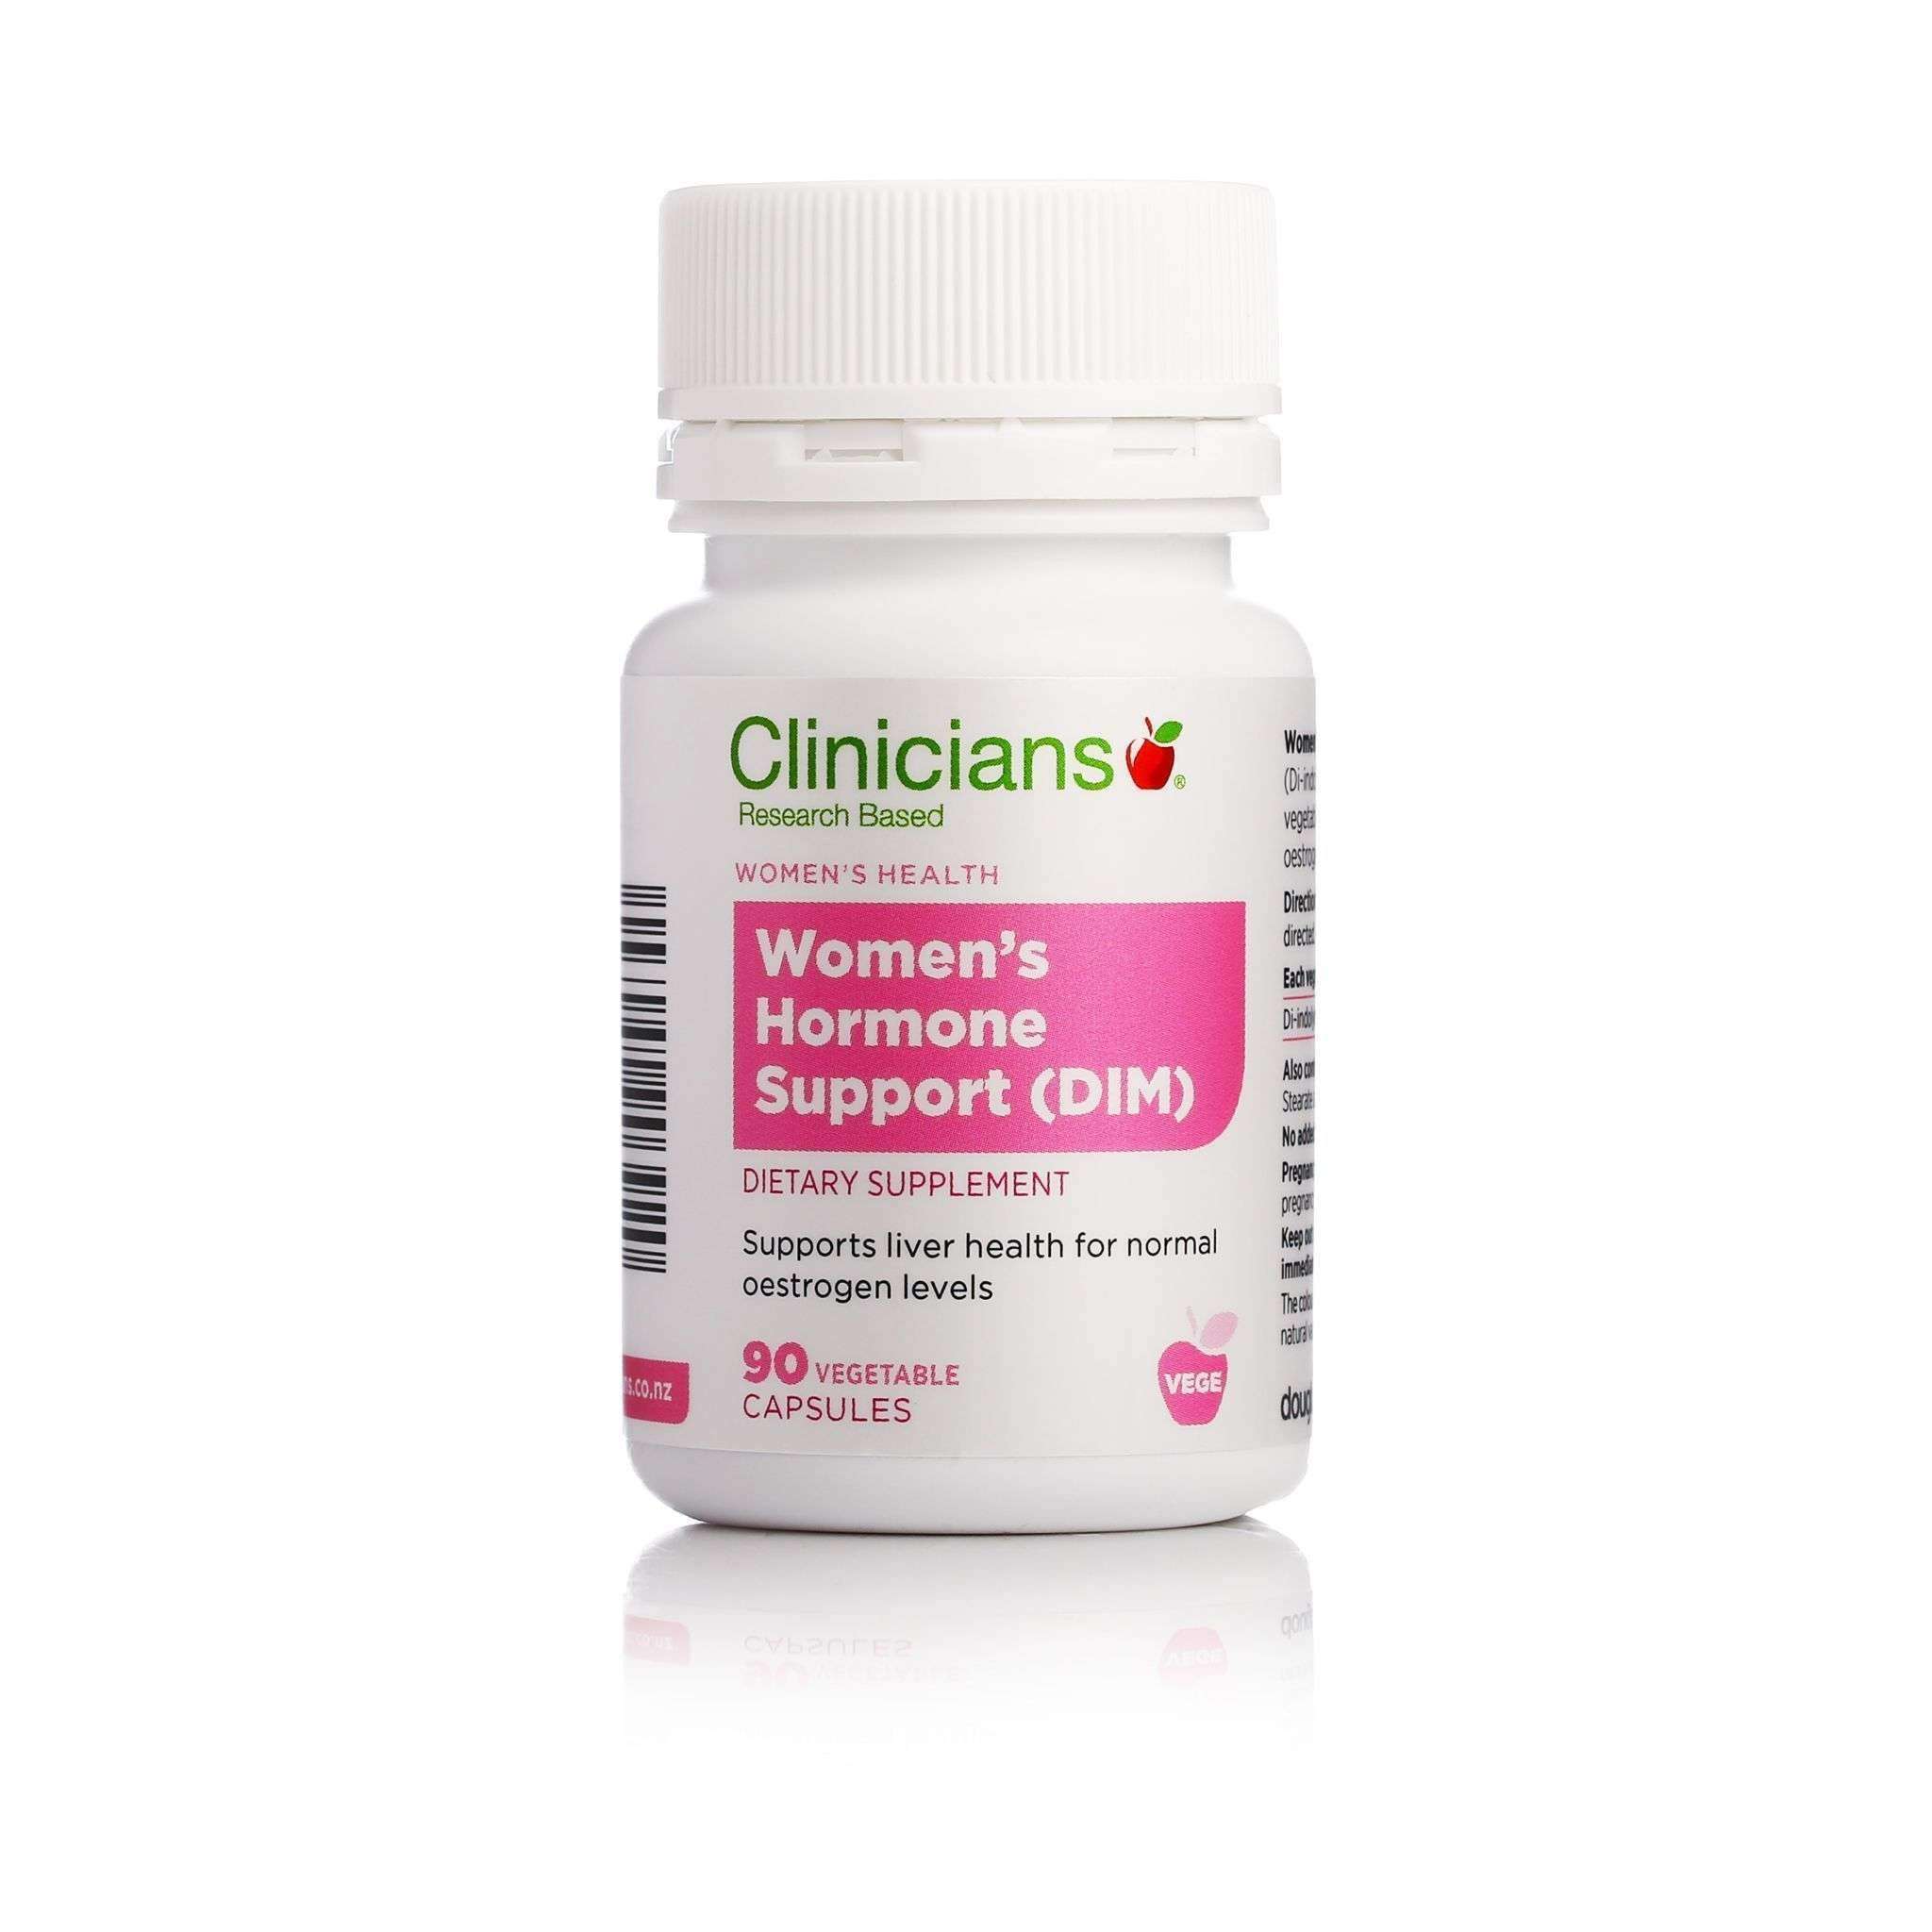 Clinicians Women's Hormone Support